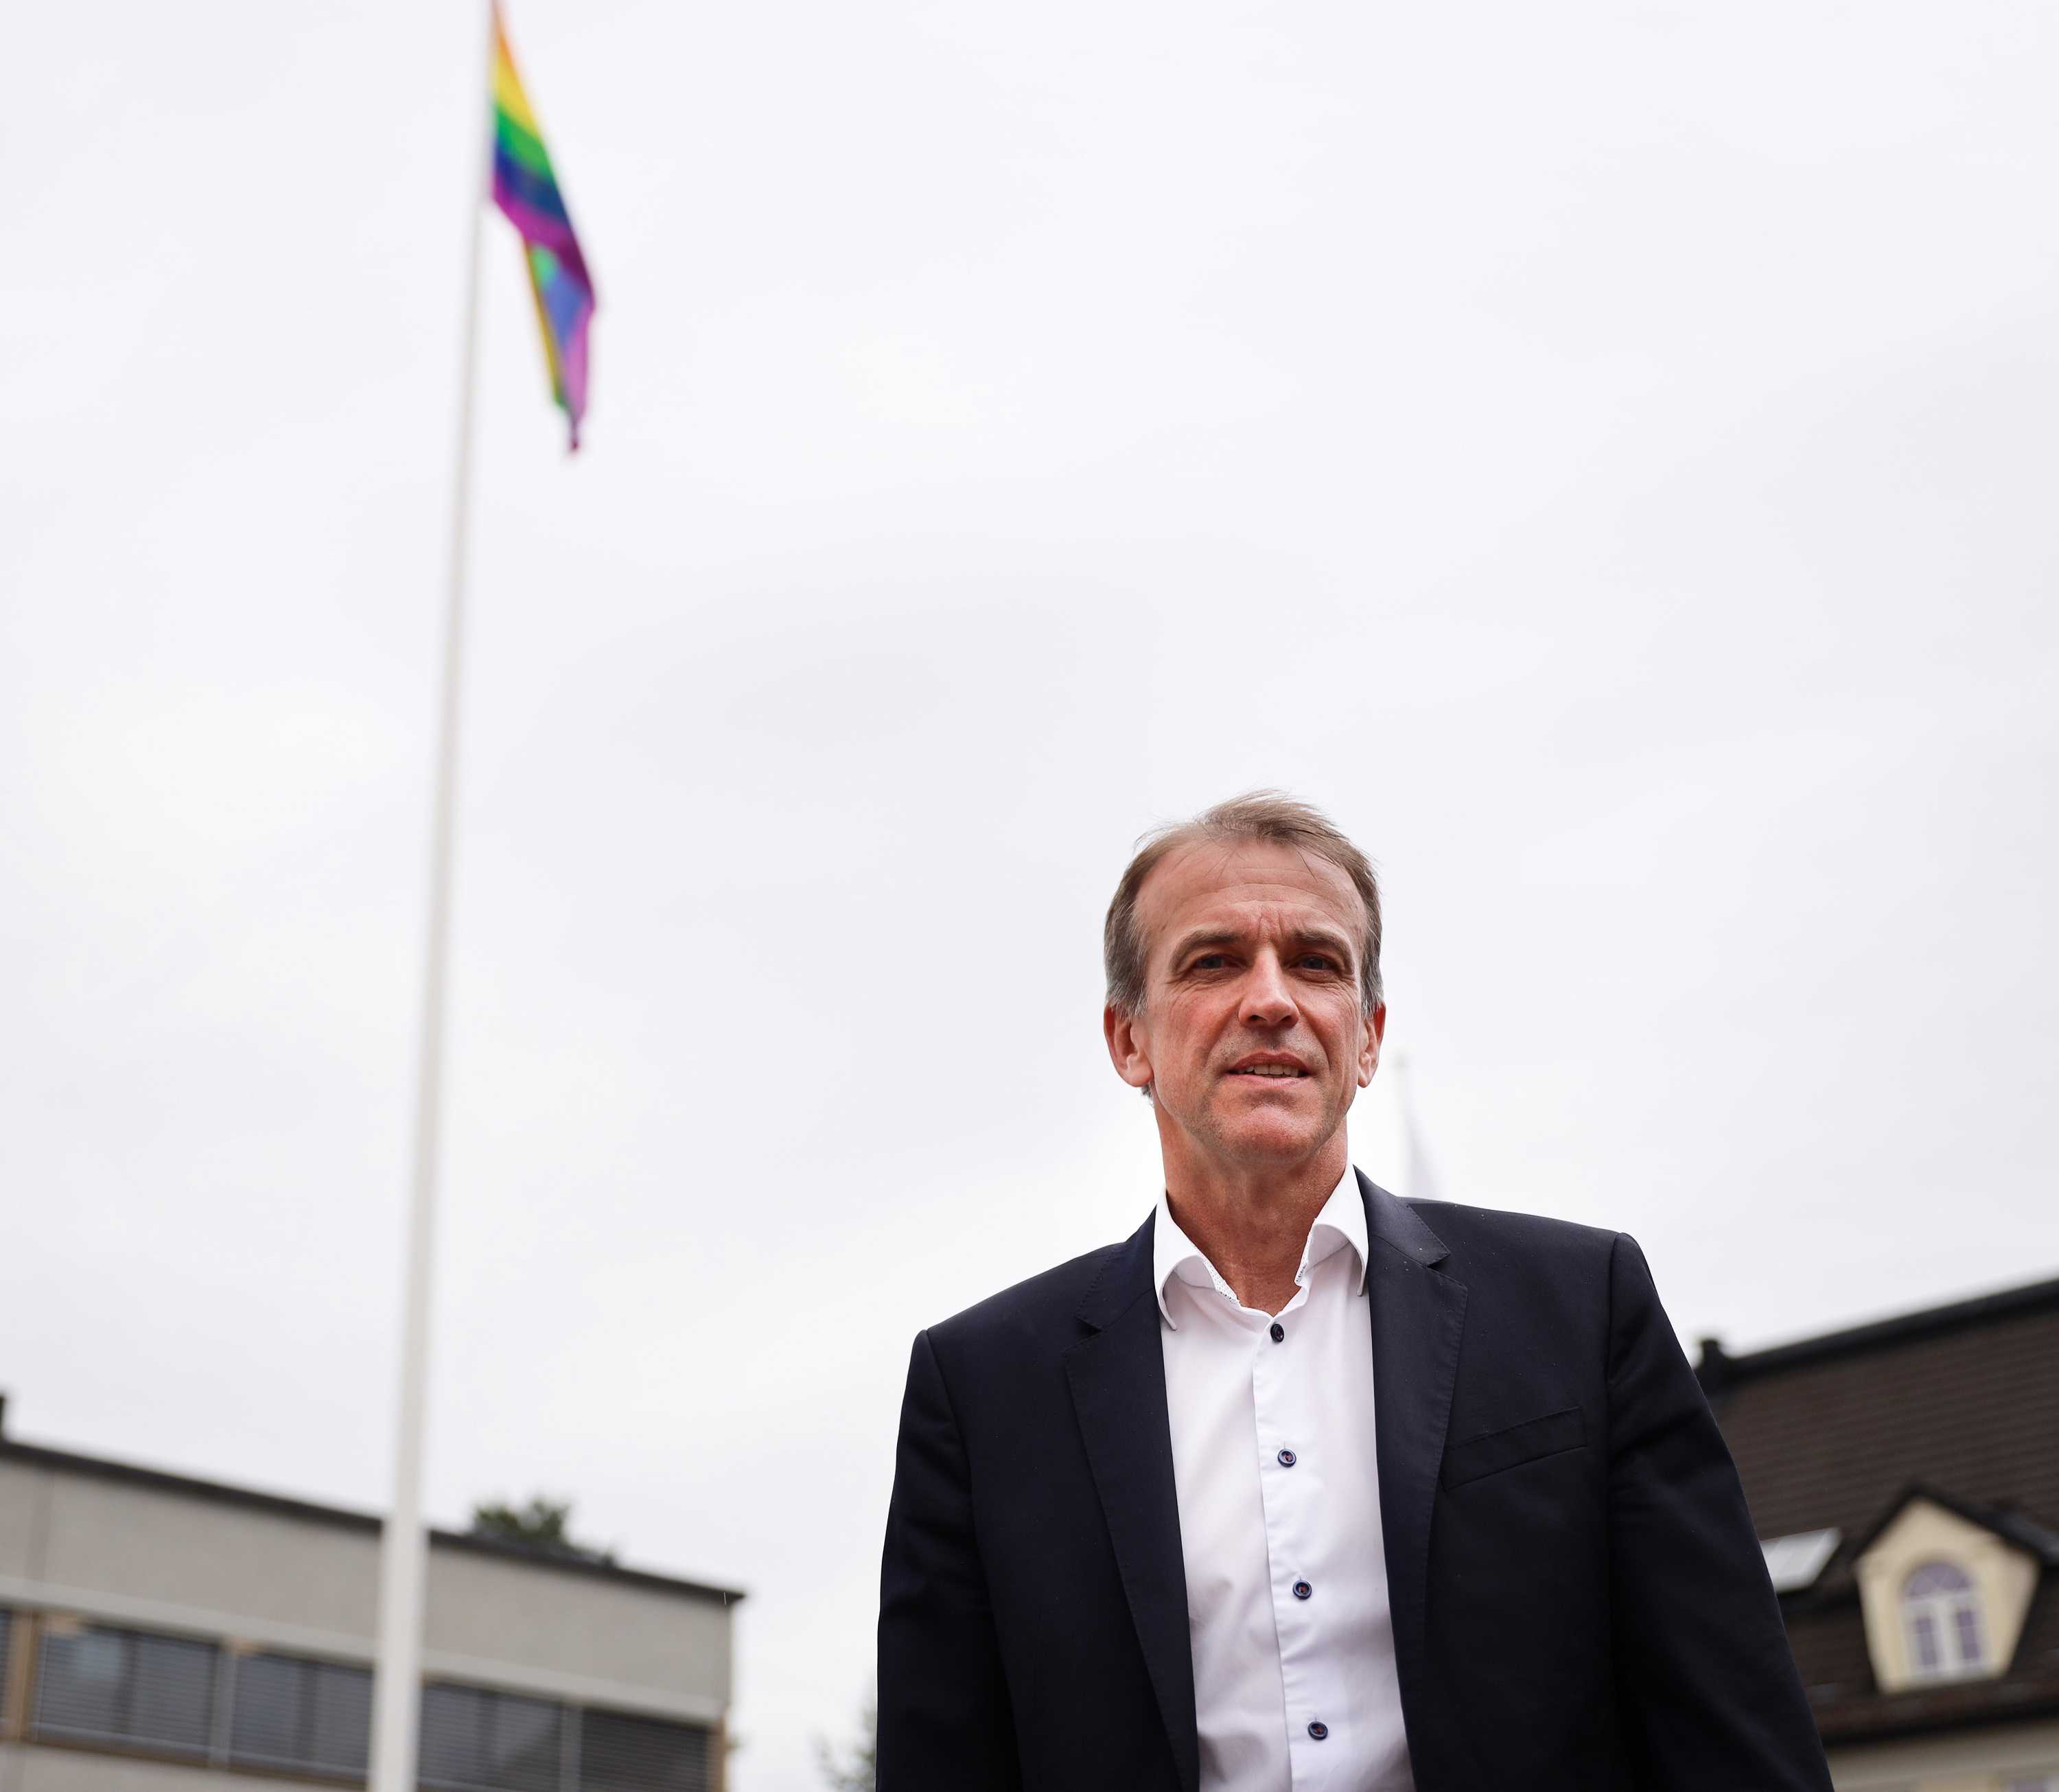 President of Kongsberg Defence & Aerospace, Eirik Lie, infront of the company's pride flag